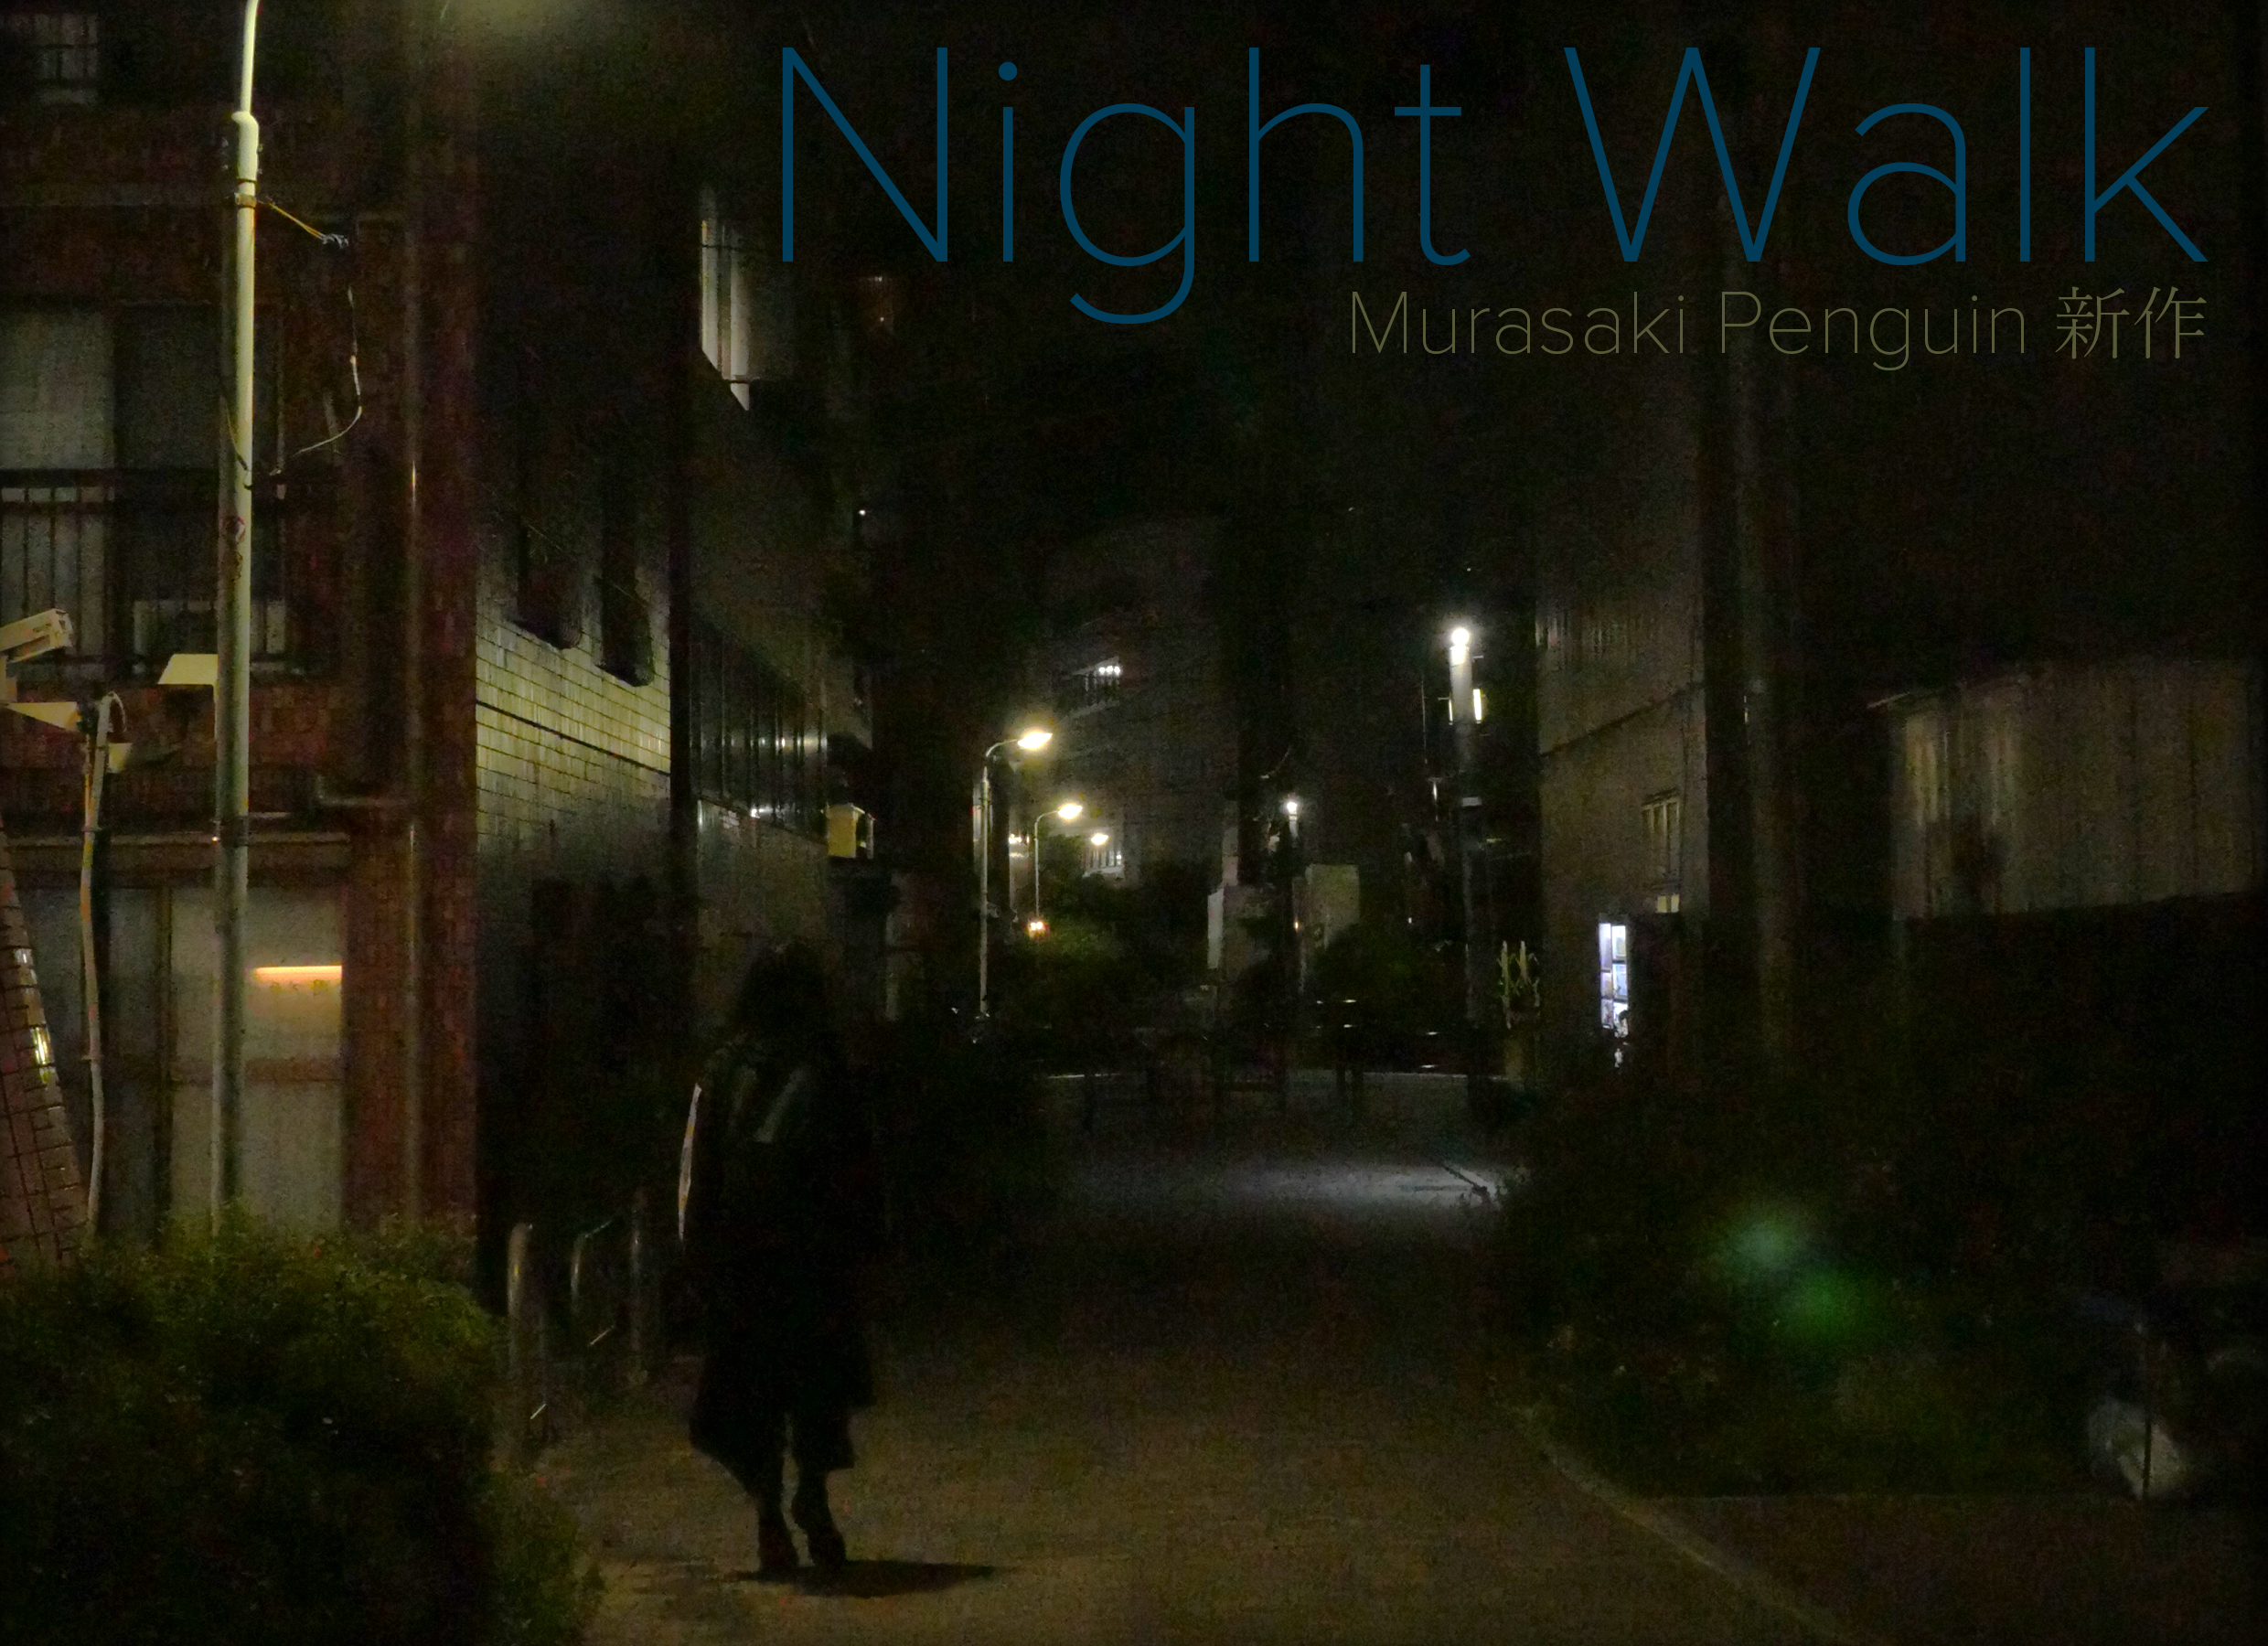 Night Walk Flyer Image Landscape